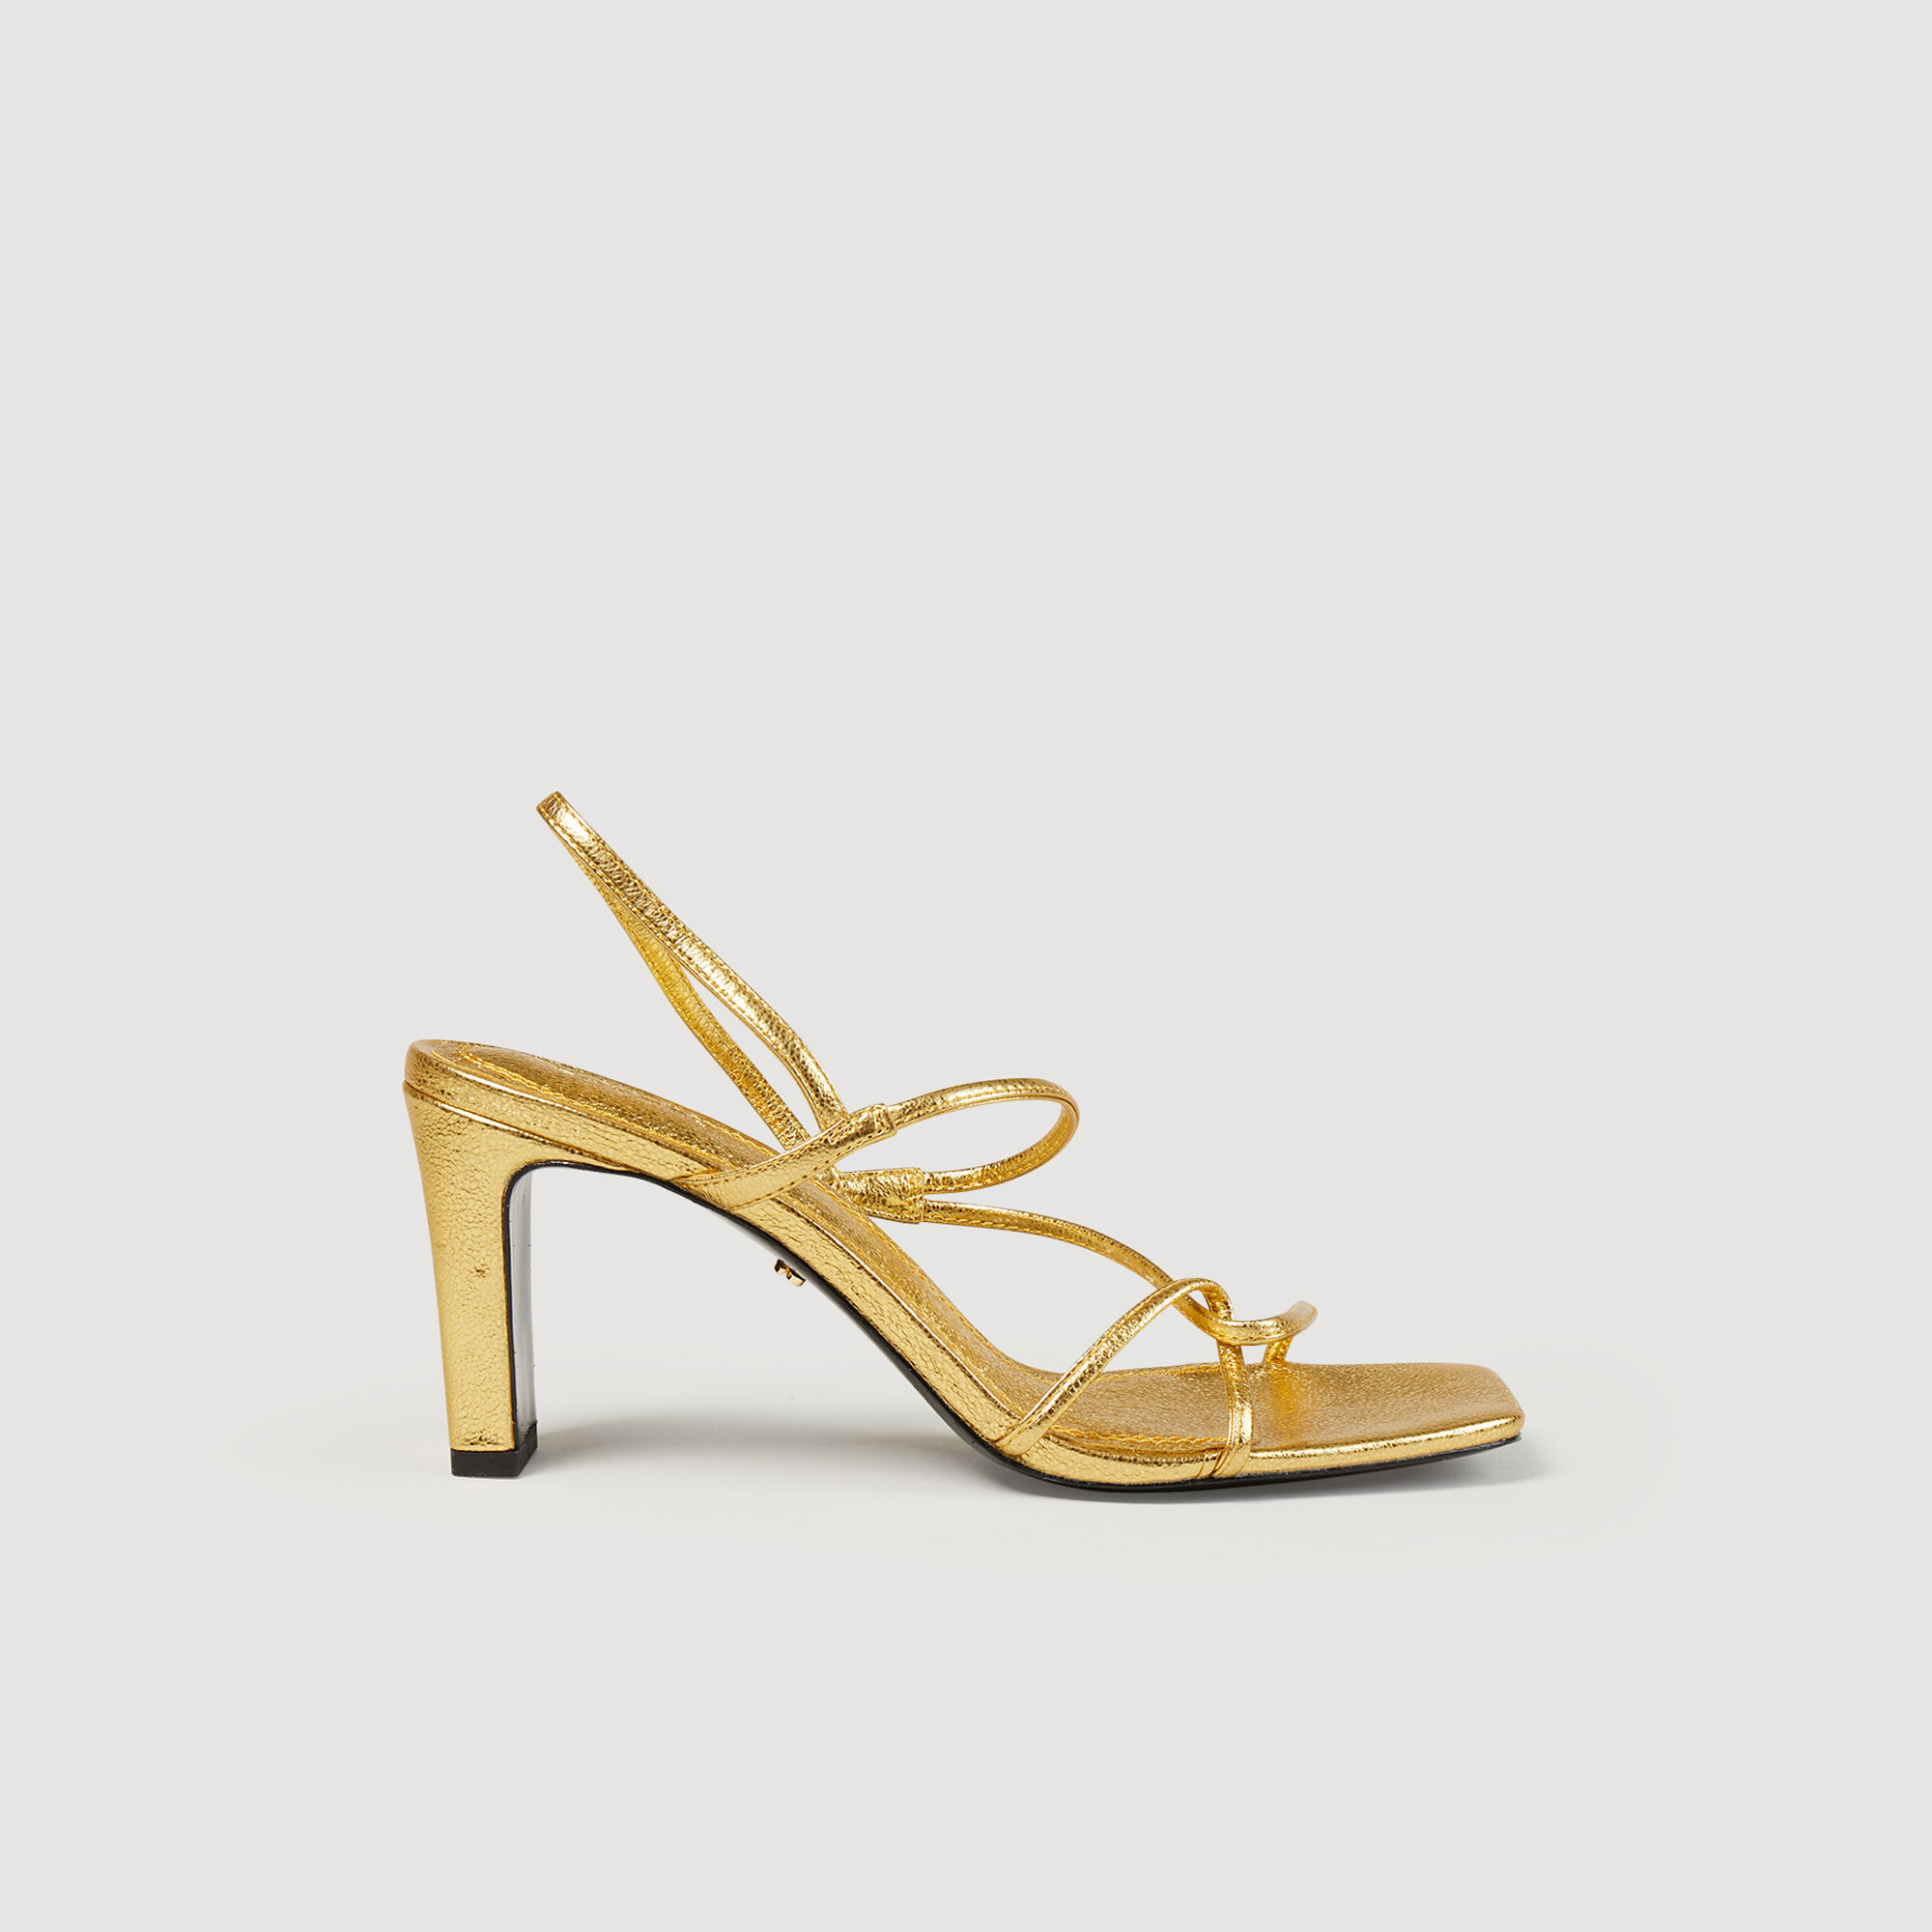 ZARA gold and black platform high heels size 39 - $24 - From Melissa